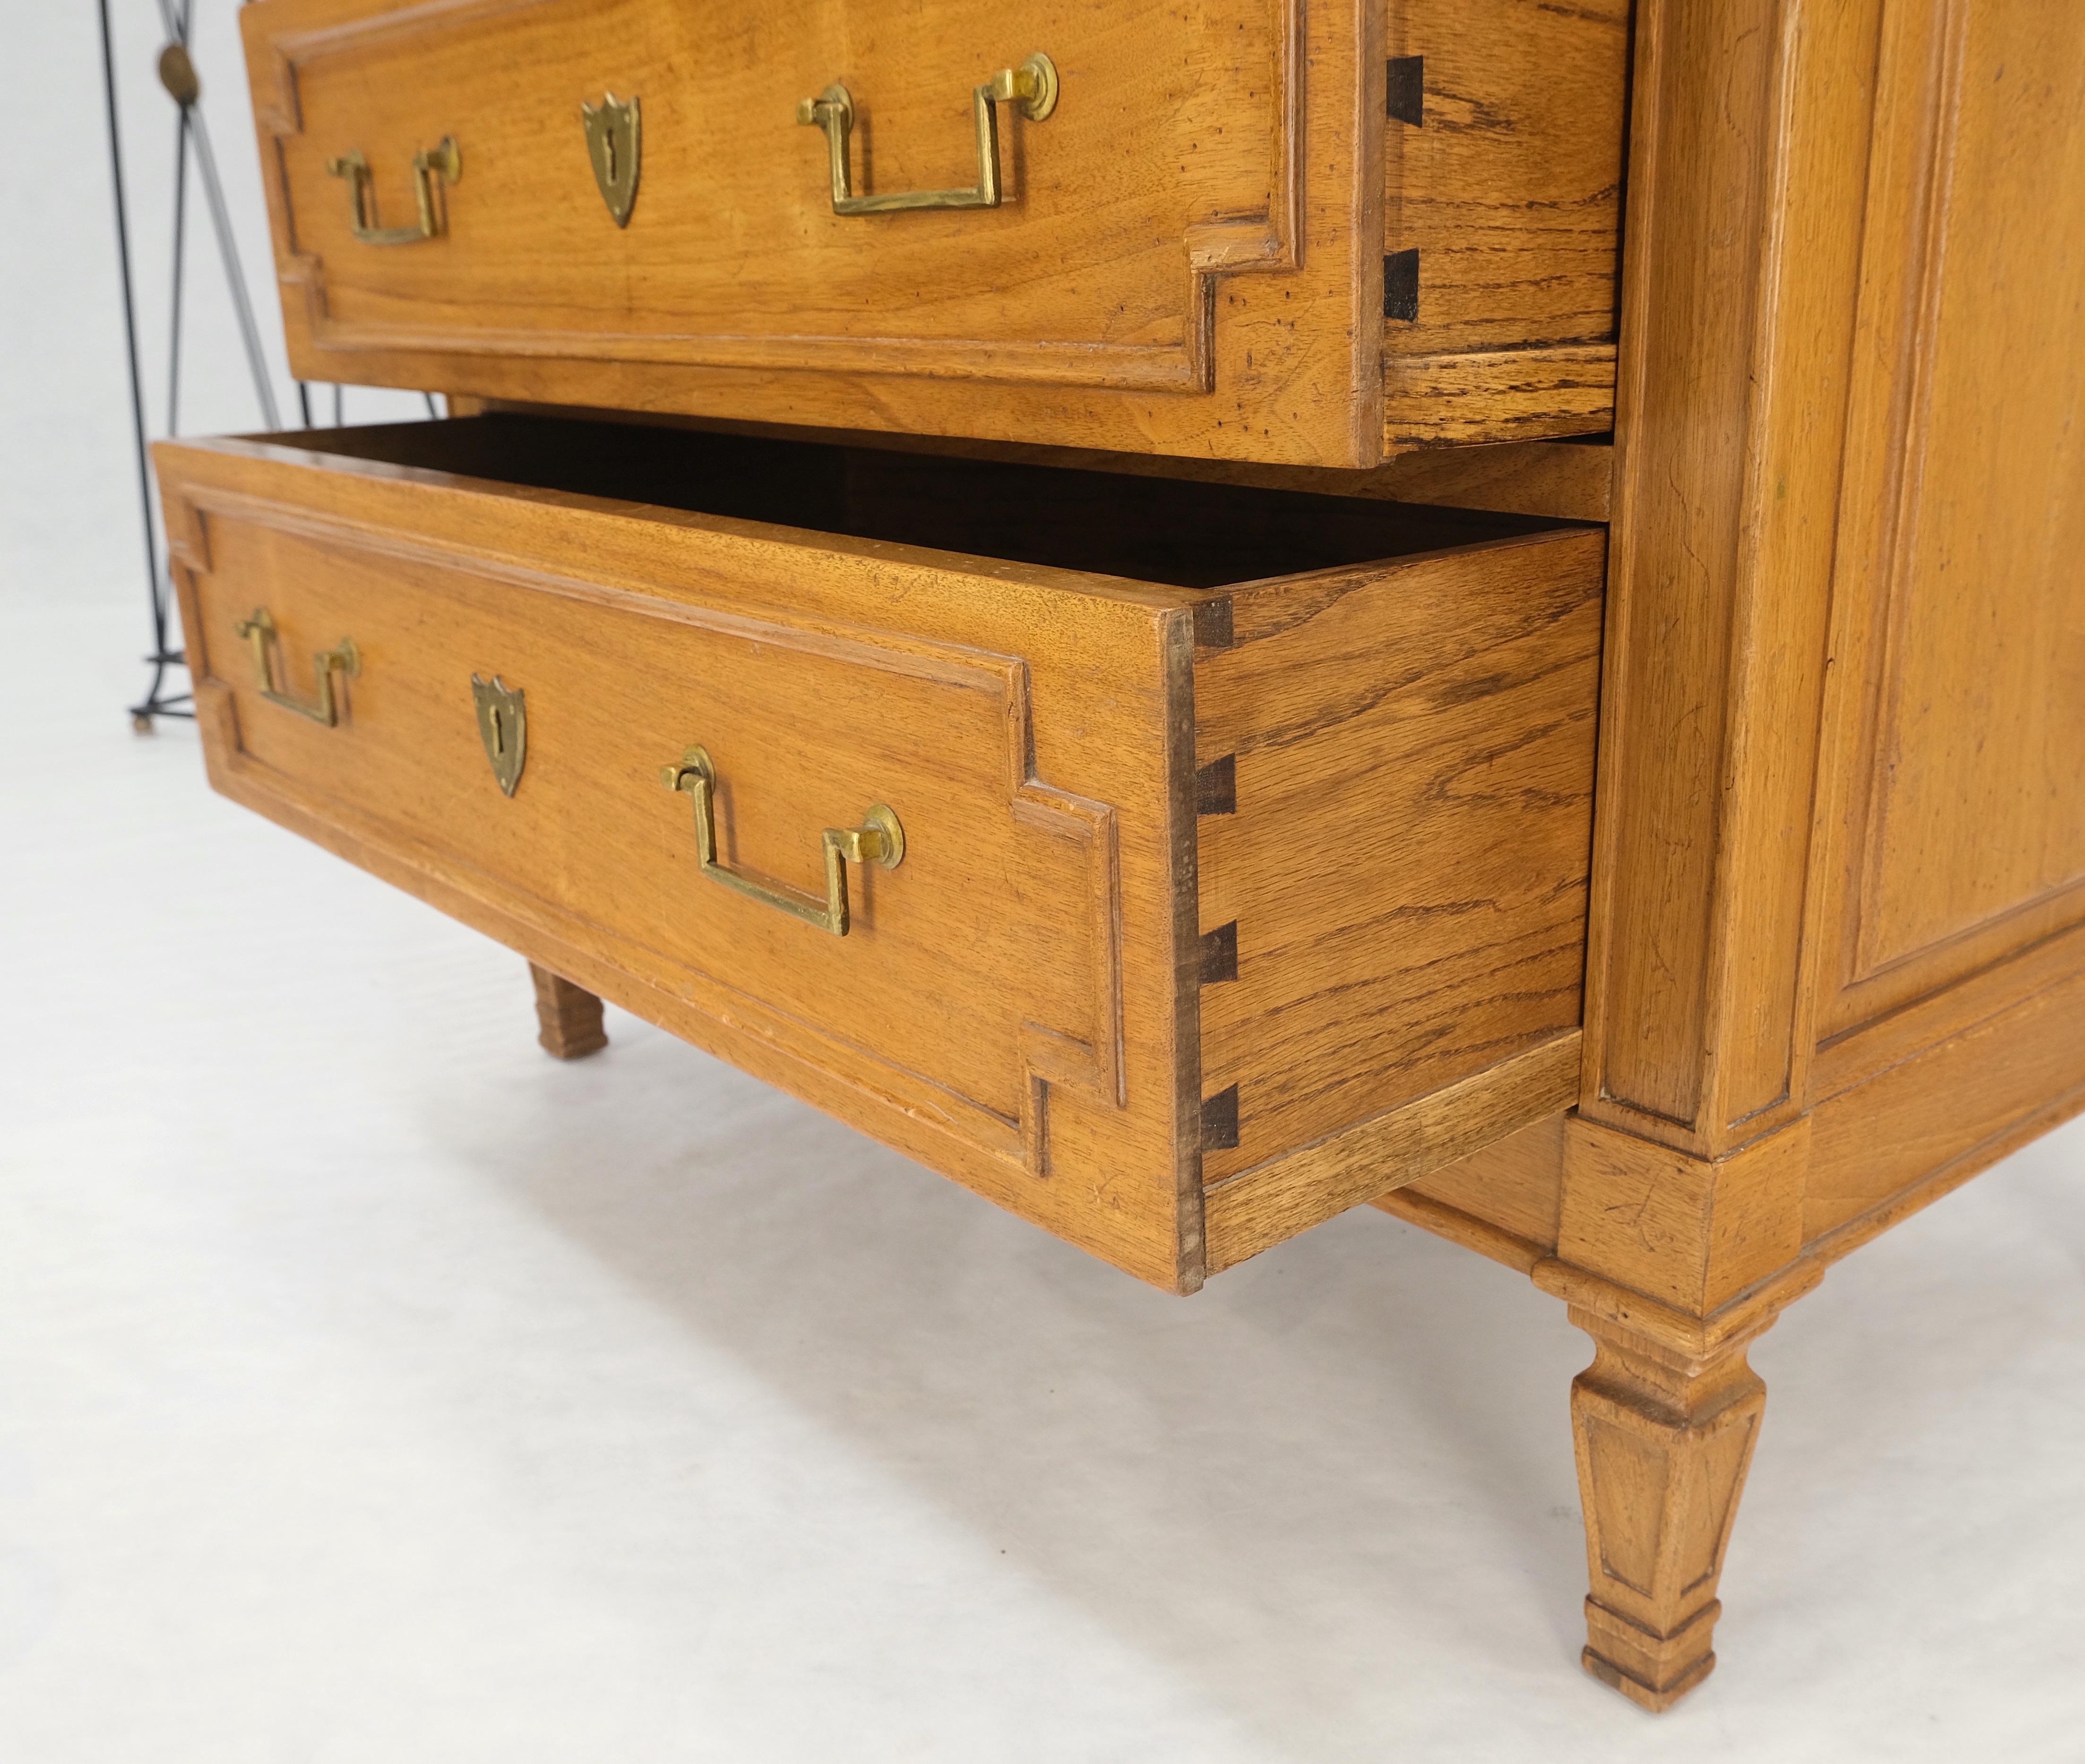 Superior Quality Light Walnut Raised Panel High Chest Dresser Cabinet Dresser MINT!
Dovetail drawers, heavy brass pulls.